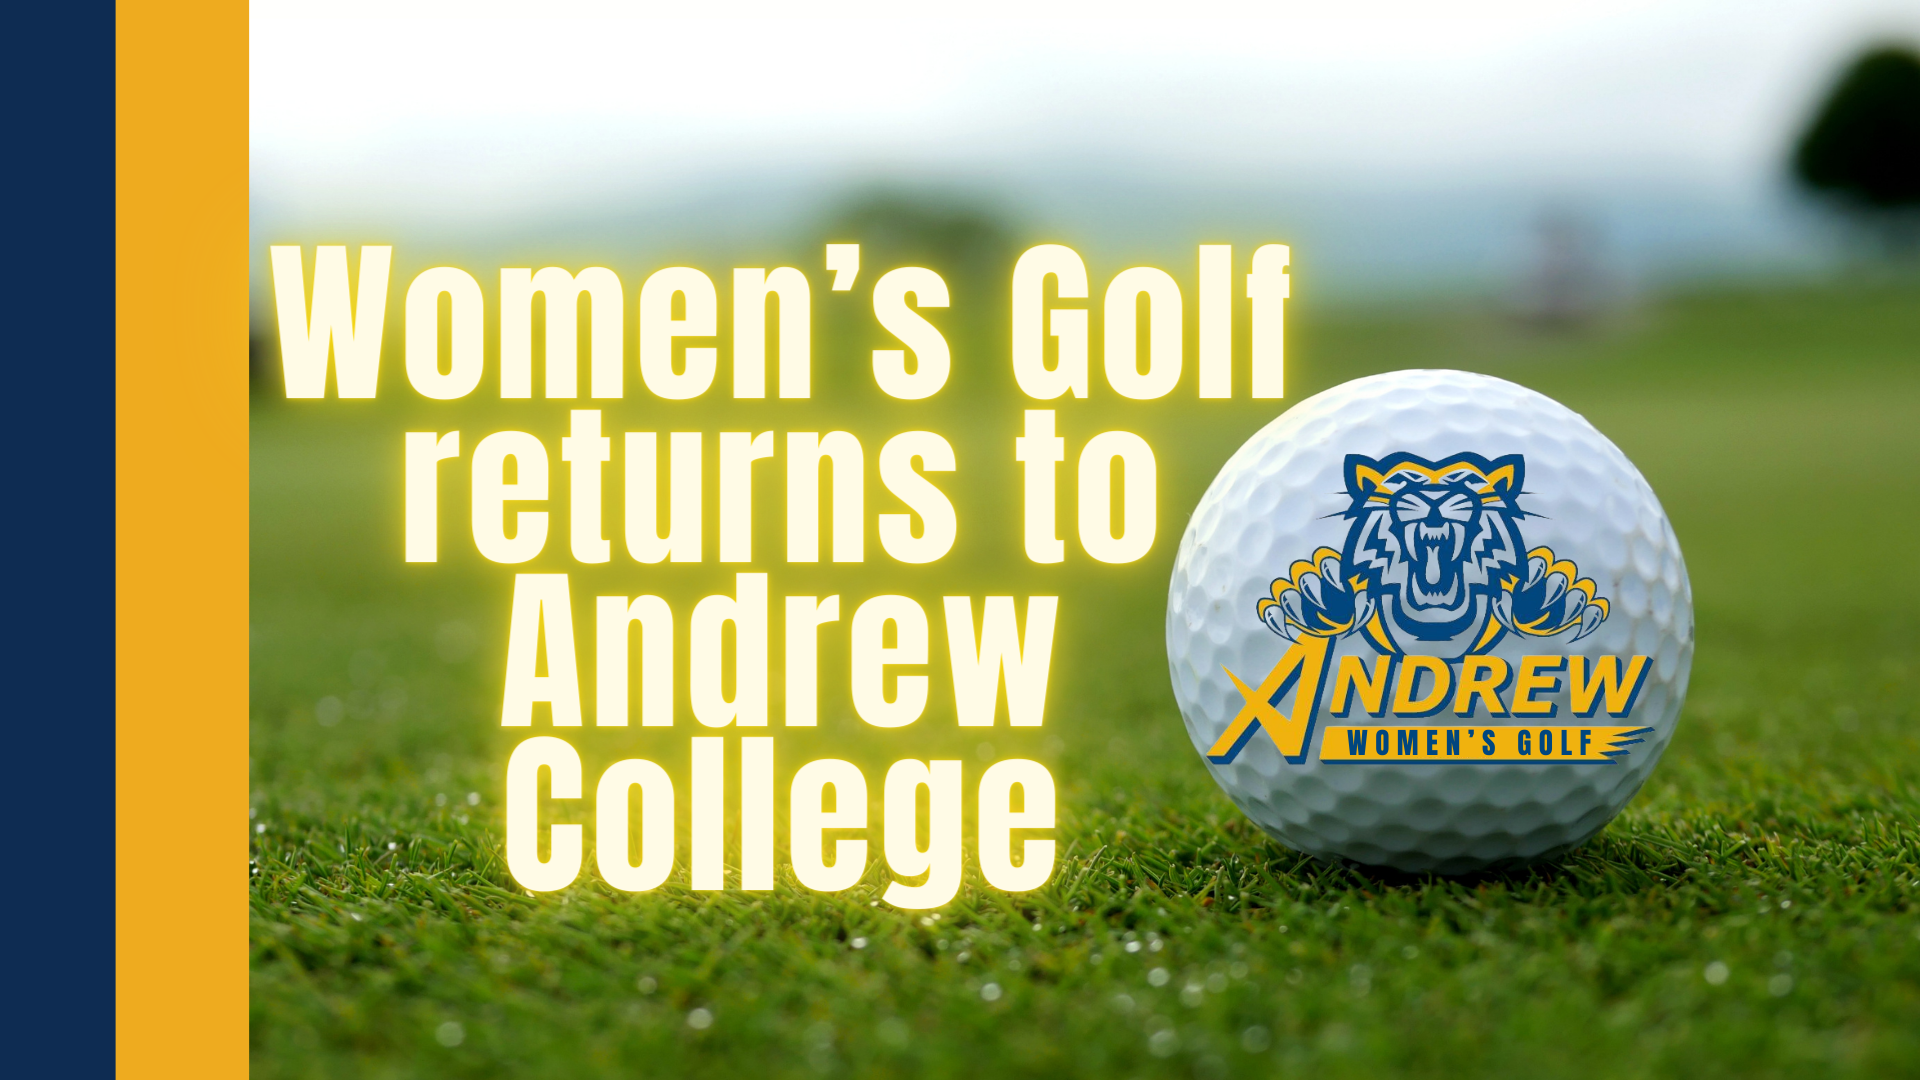 Women's Golf returns to Andrew College.